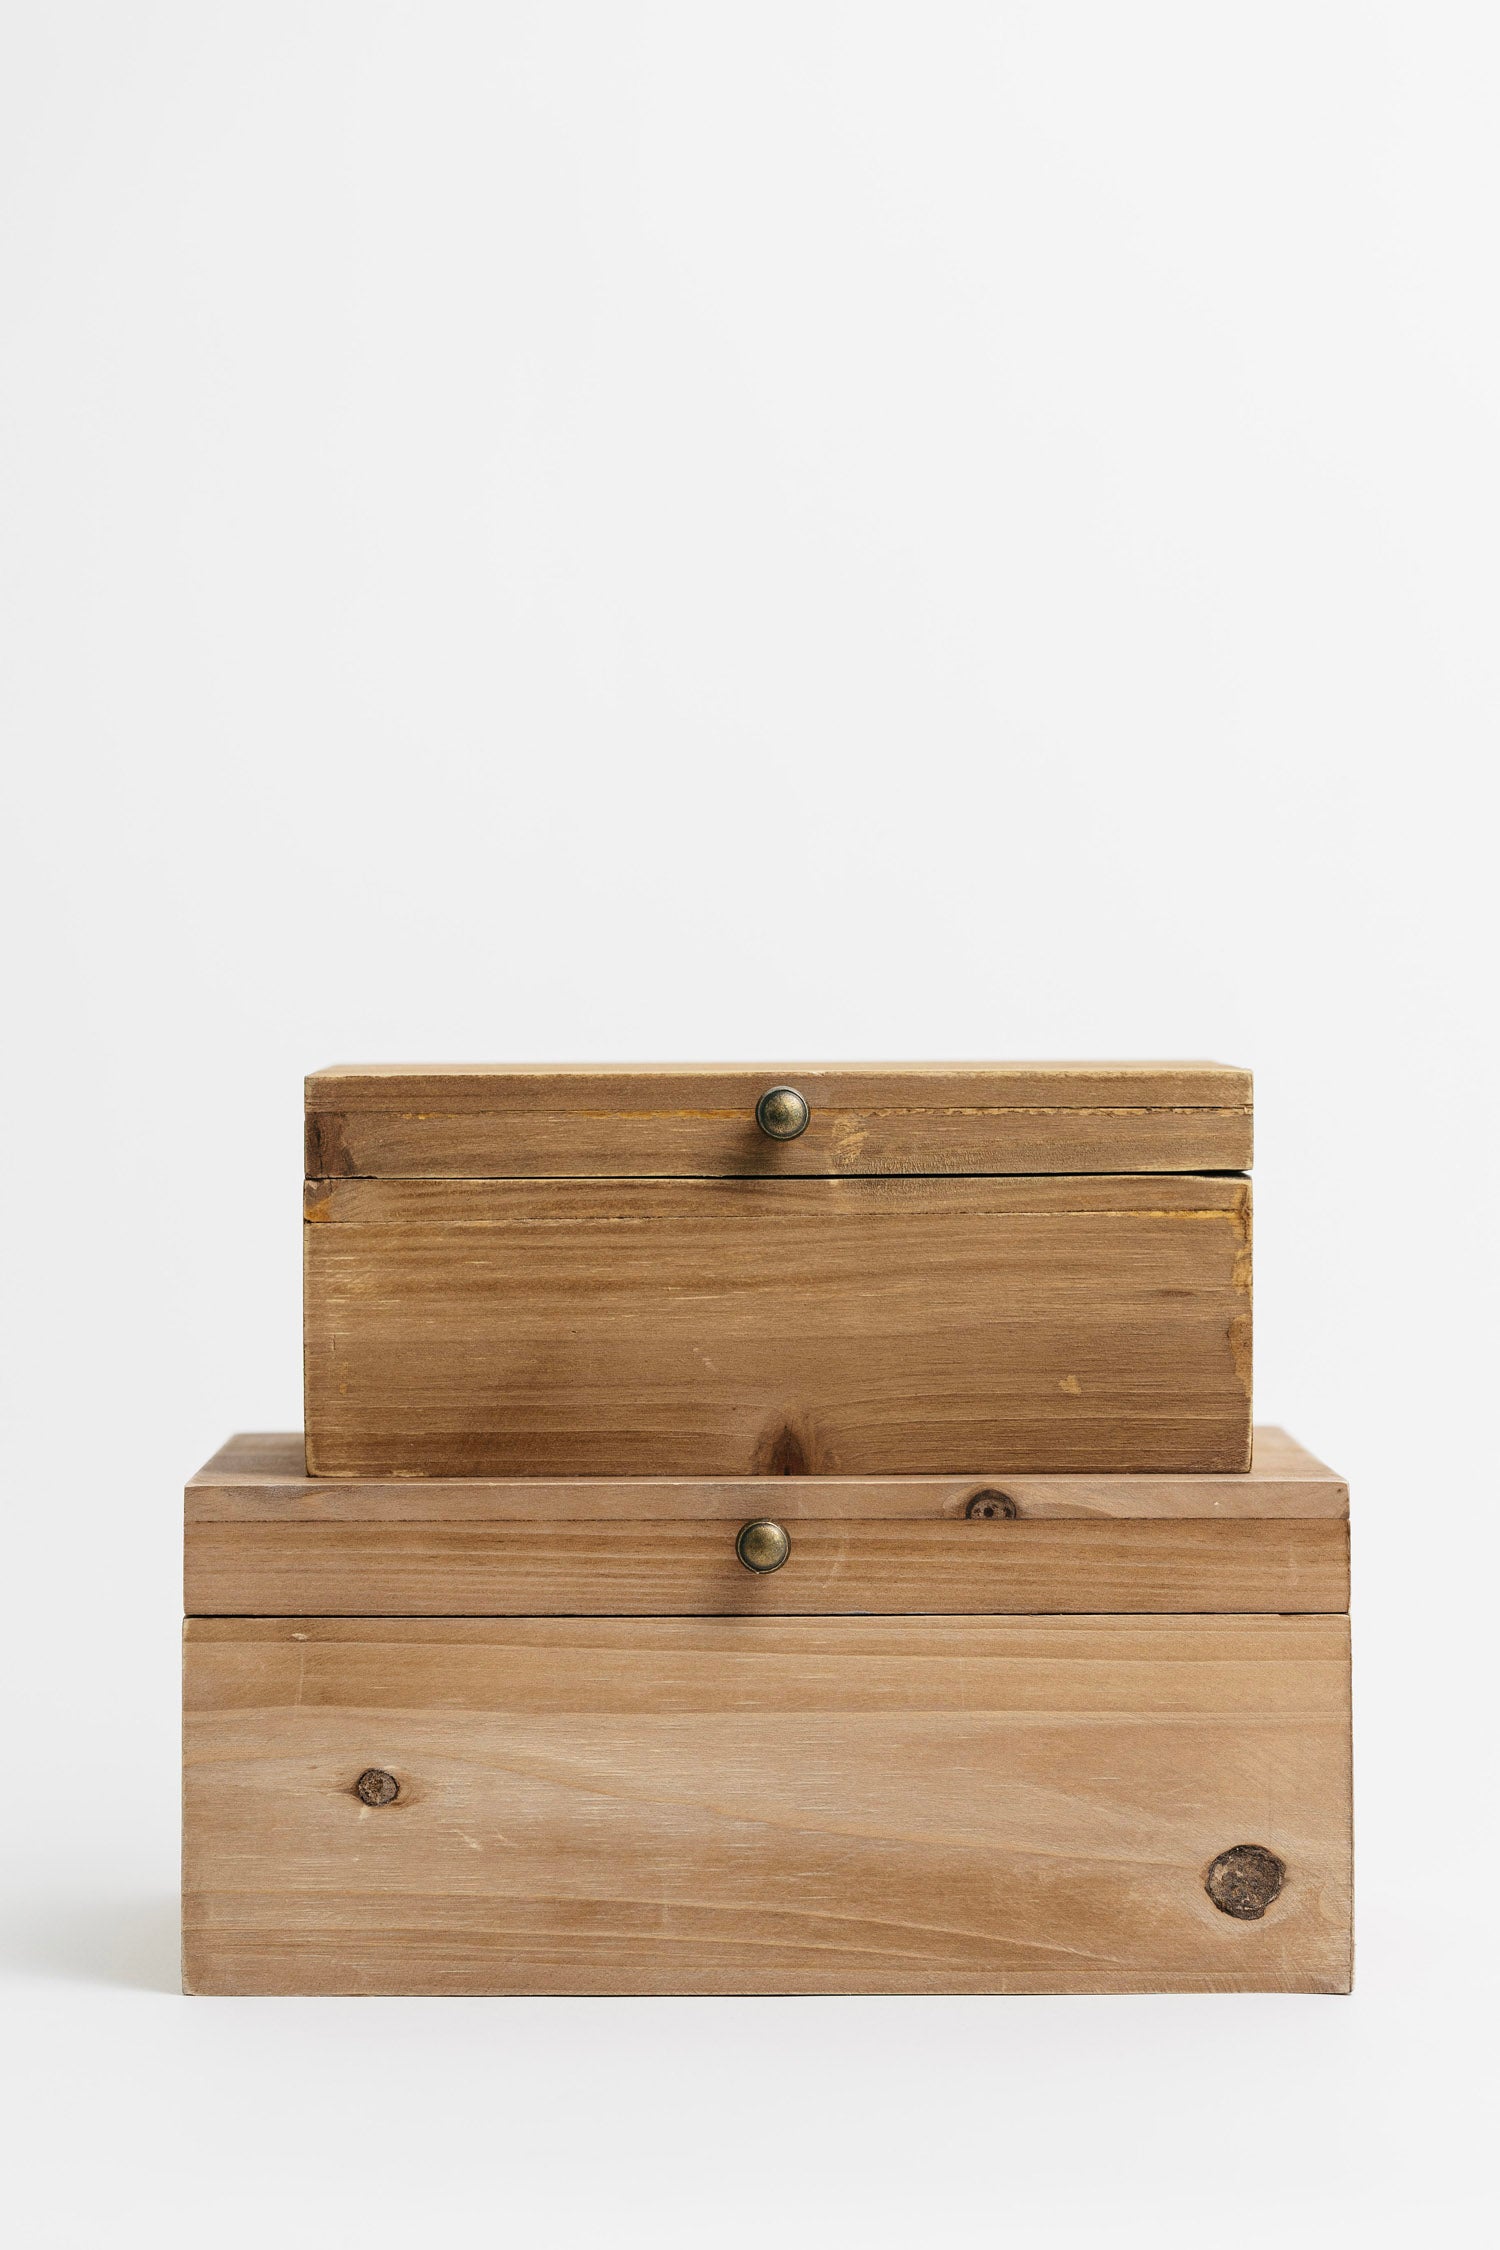 Alton Wood Box - 2 Sizes